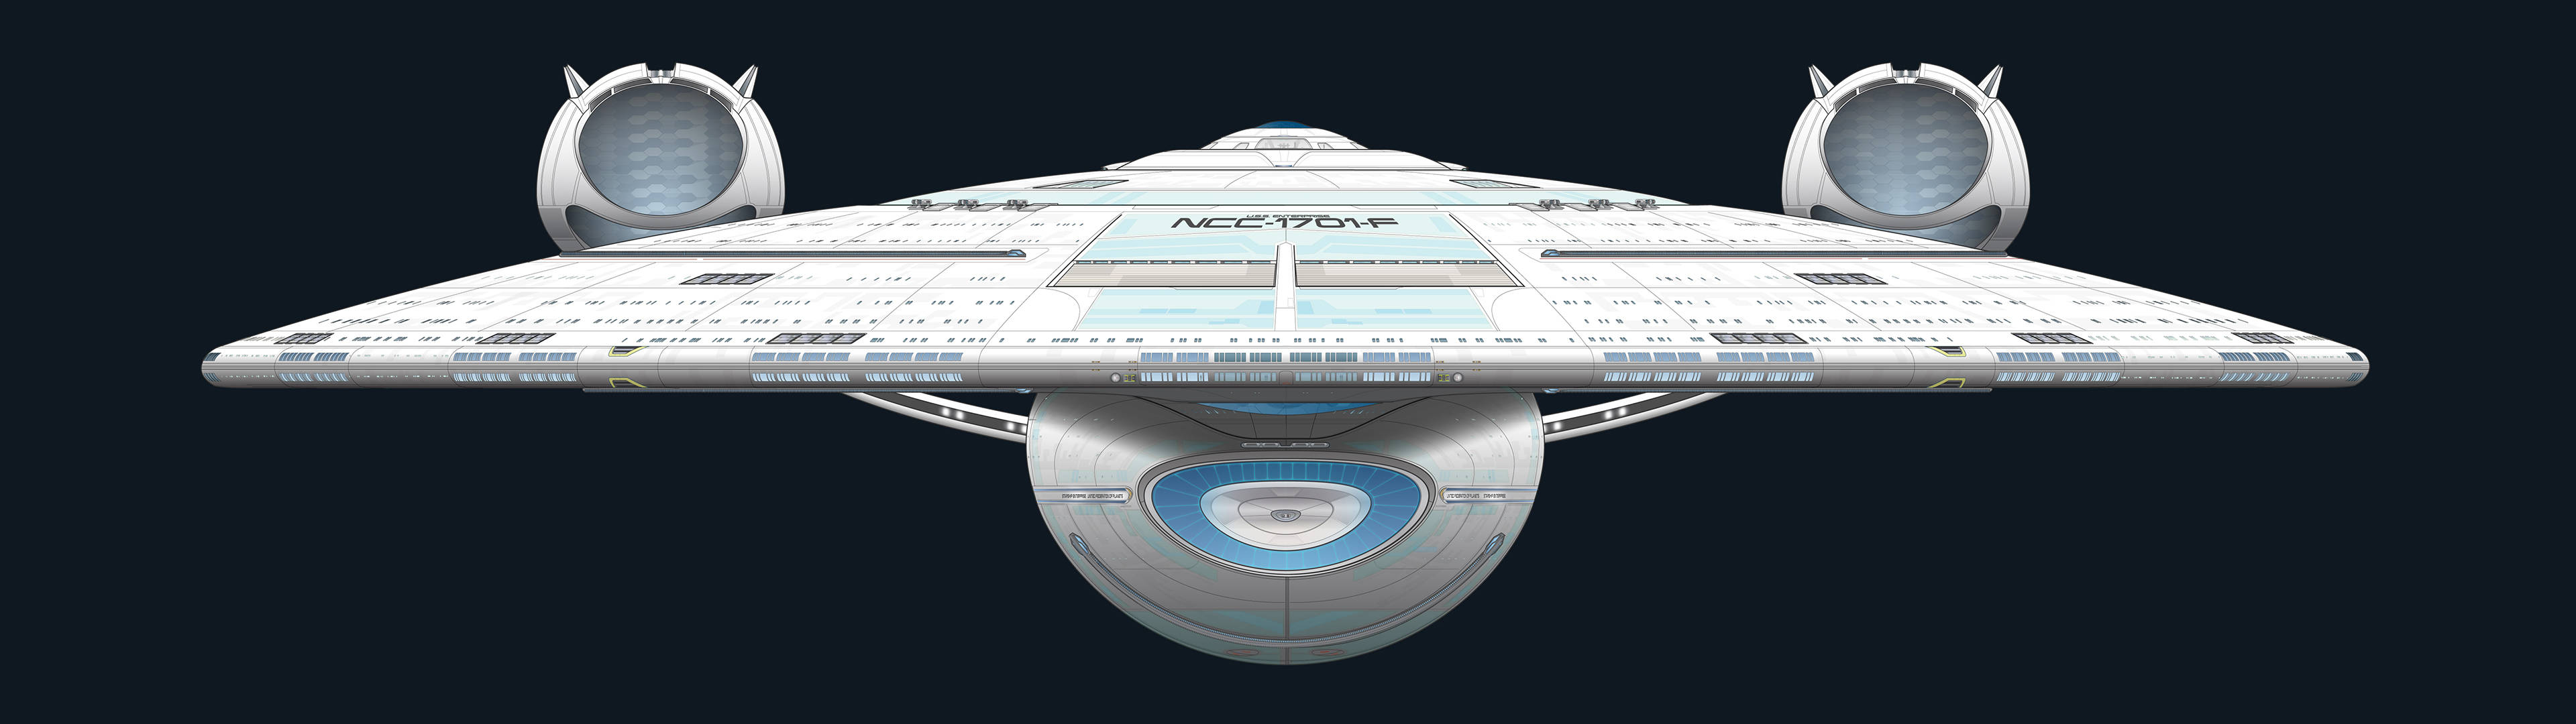 Star Trek Starship USS Enterprise NCC-1701-F Front View Wallpaper